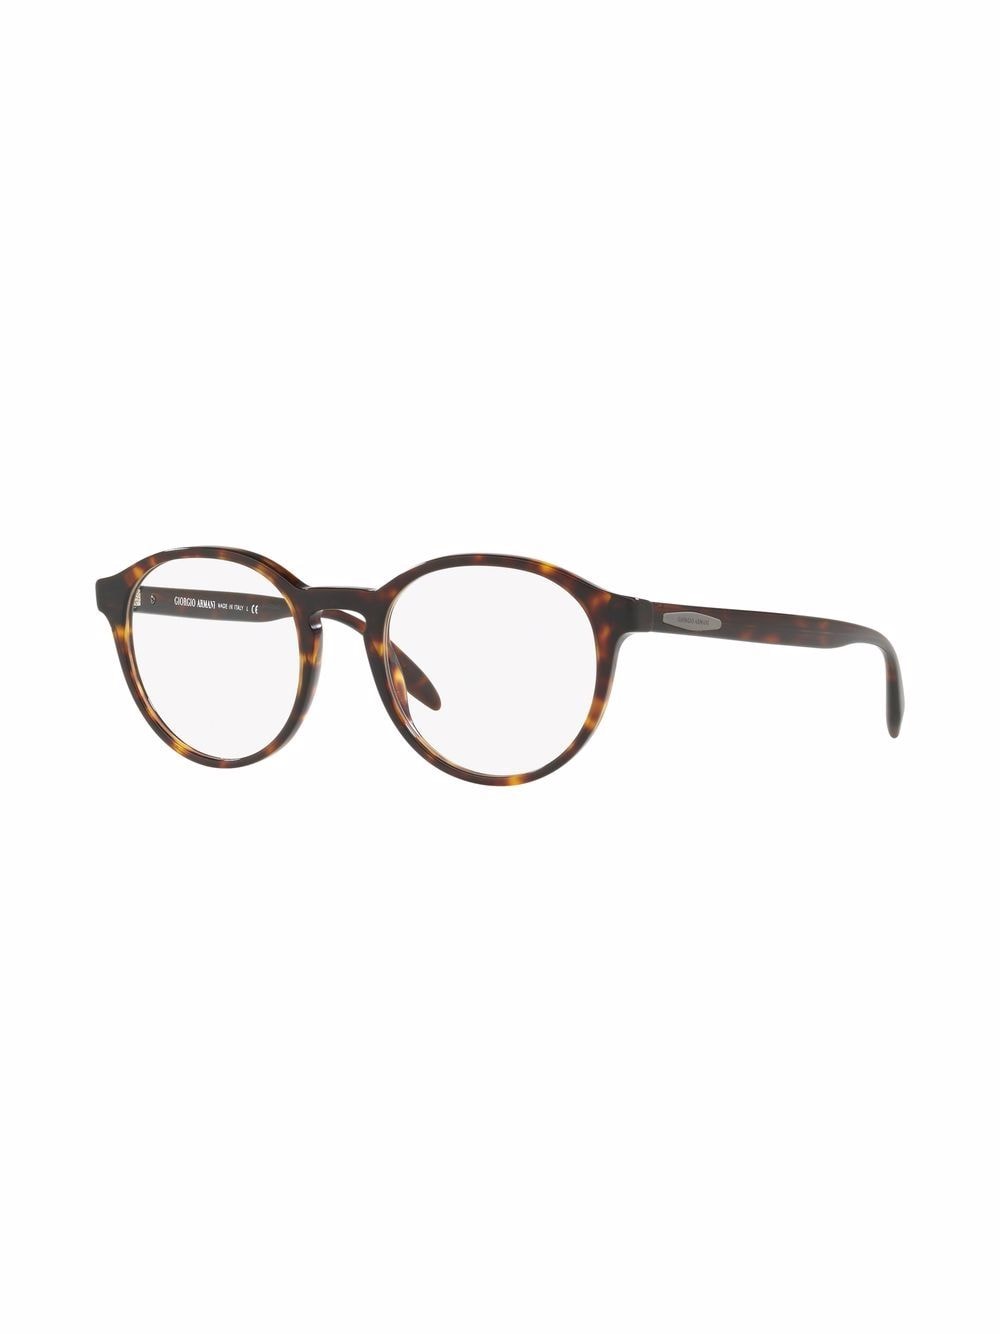 Shop Giorgio Armani tortoiseshell round-frame glasses with Express Delivery  - FARFETCH